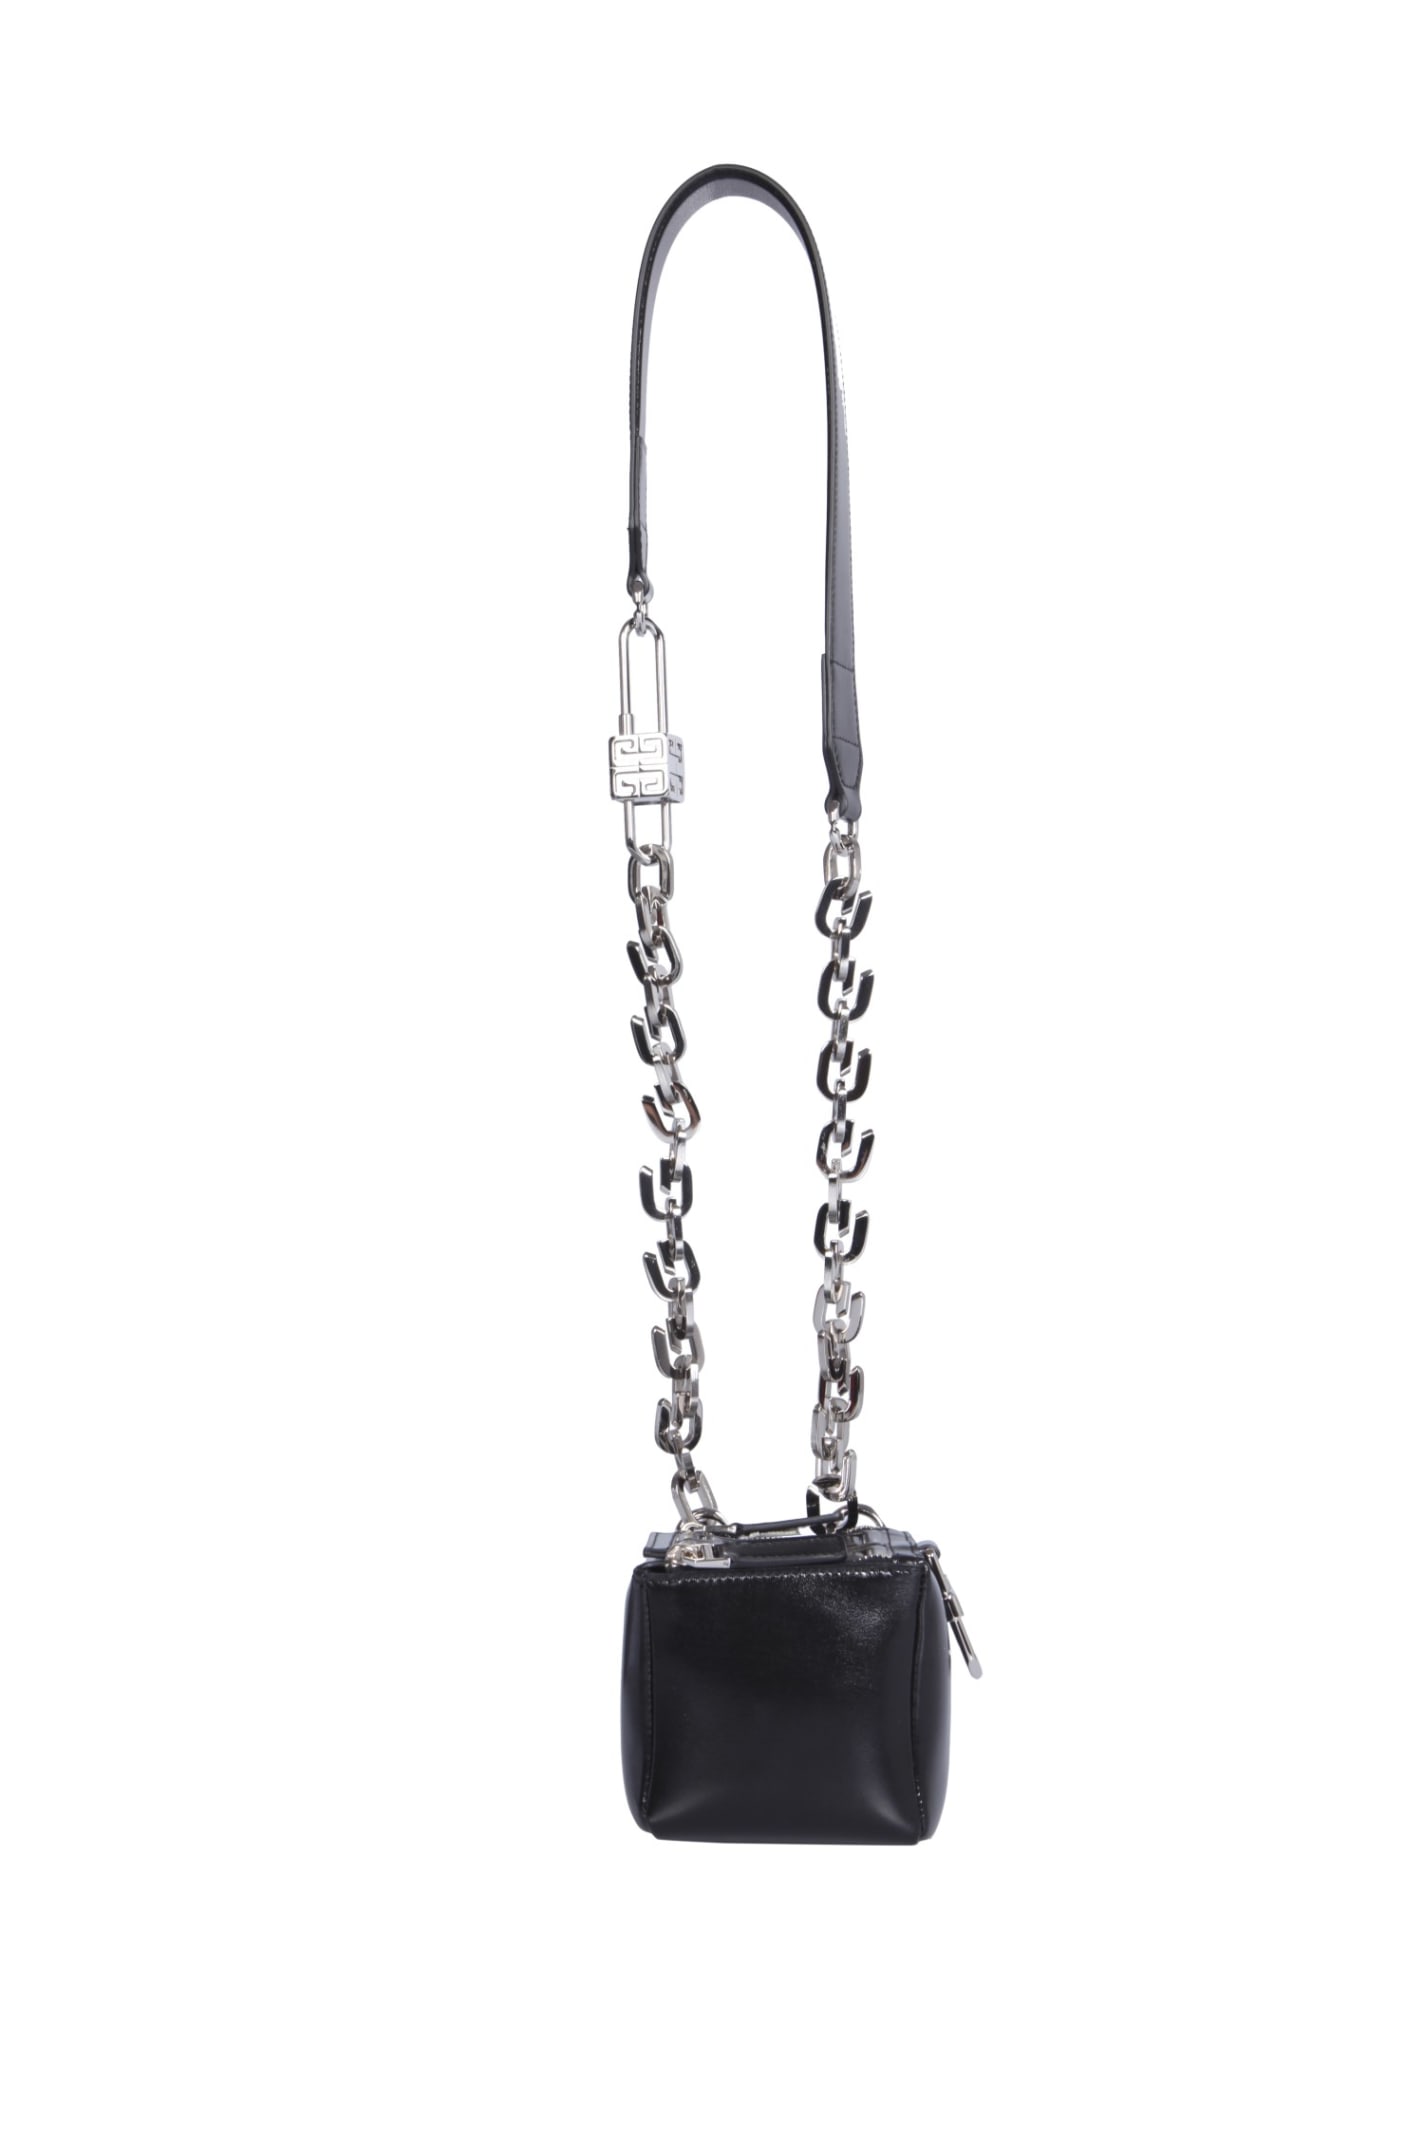 Givenchy PANDORA CUBE BAG